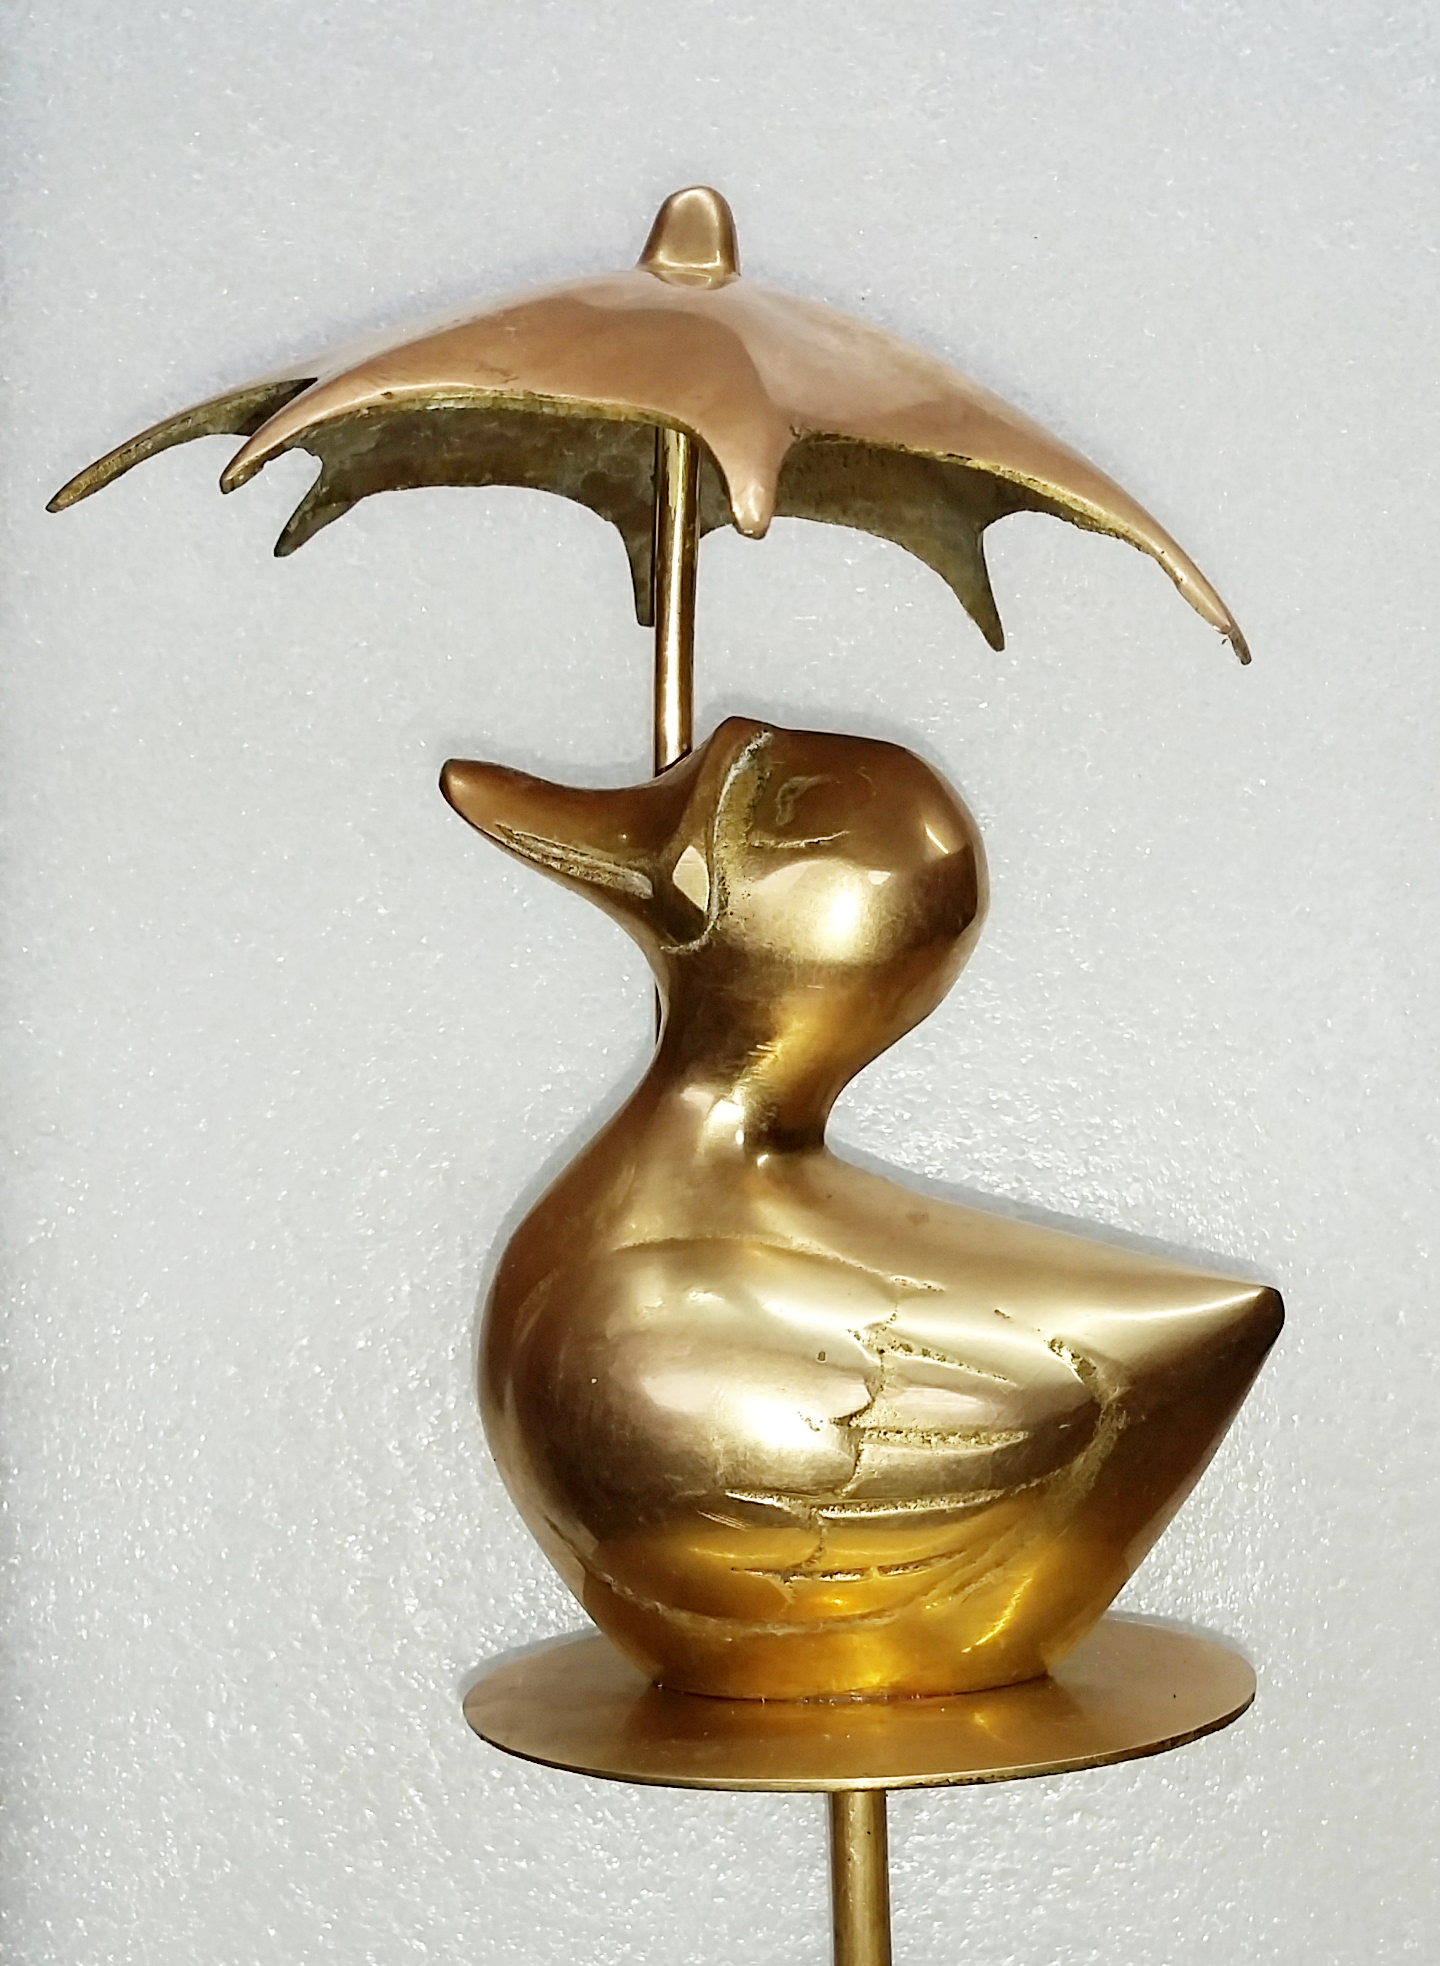 Duck under Umbrella (large) Tiller Pin